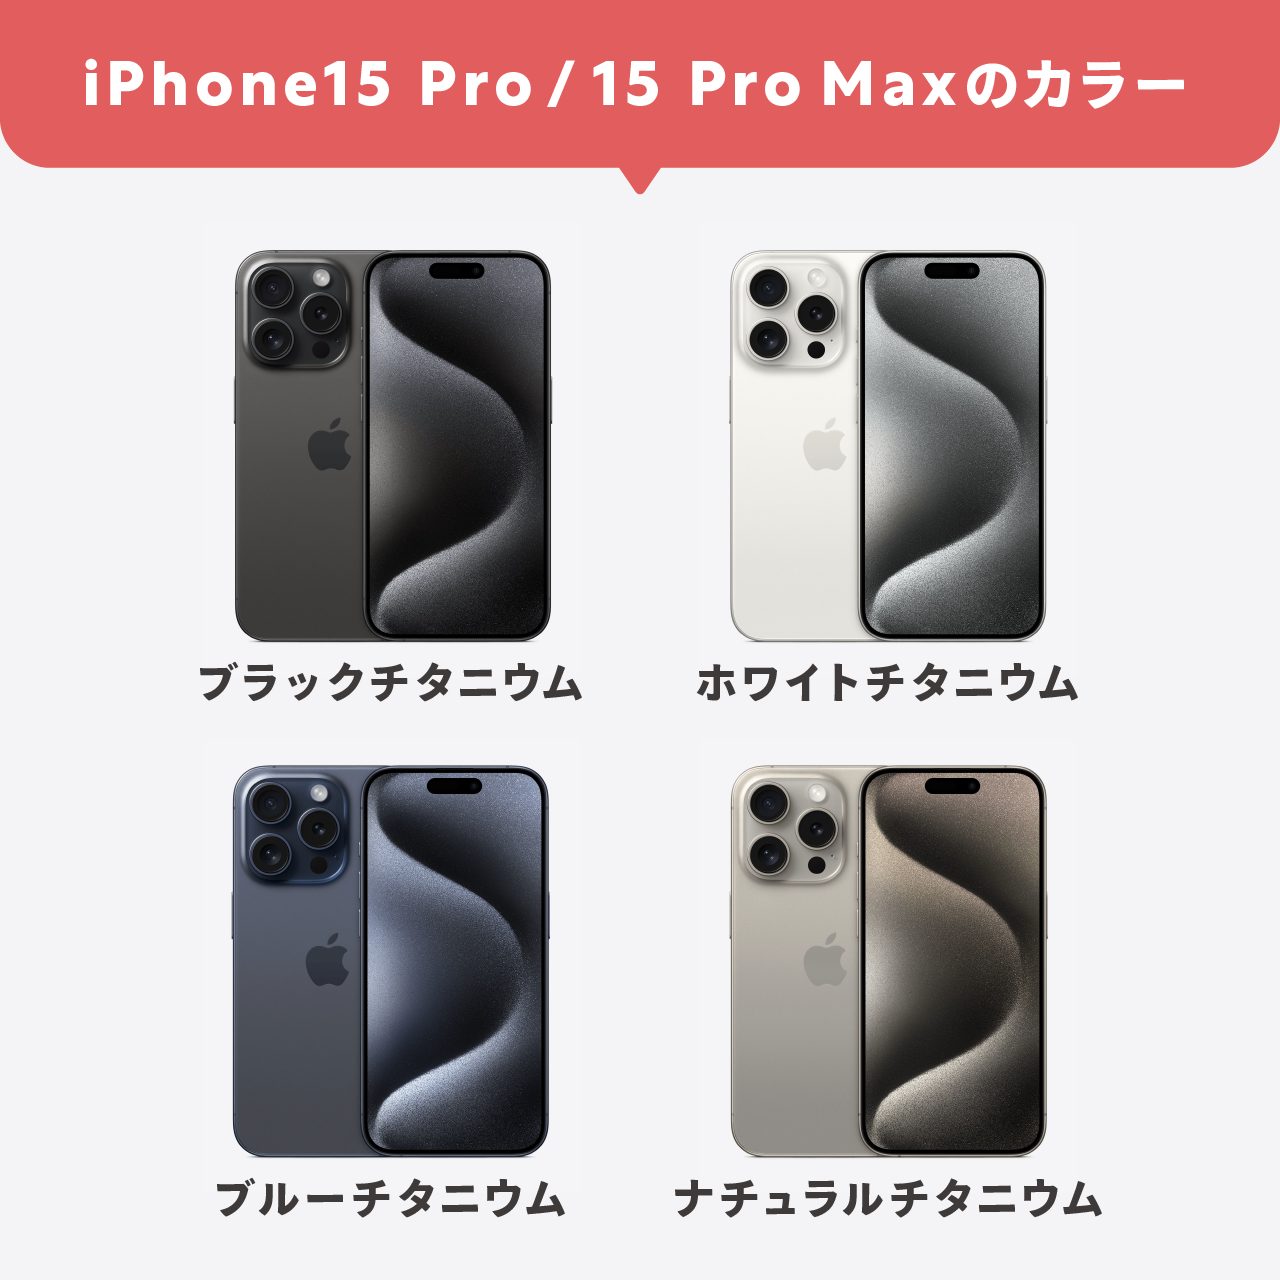 iPhone15Pro/15ProMaxのカラー